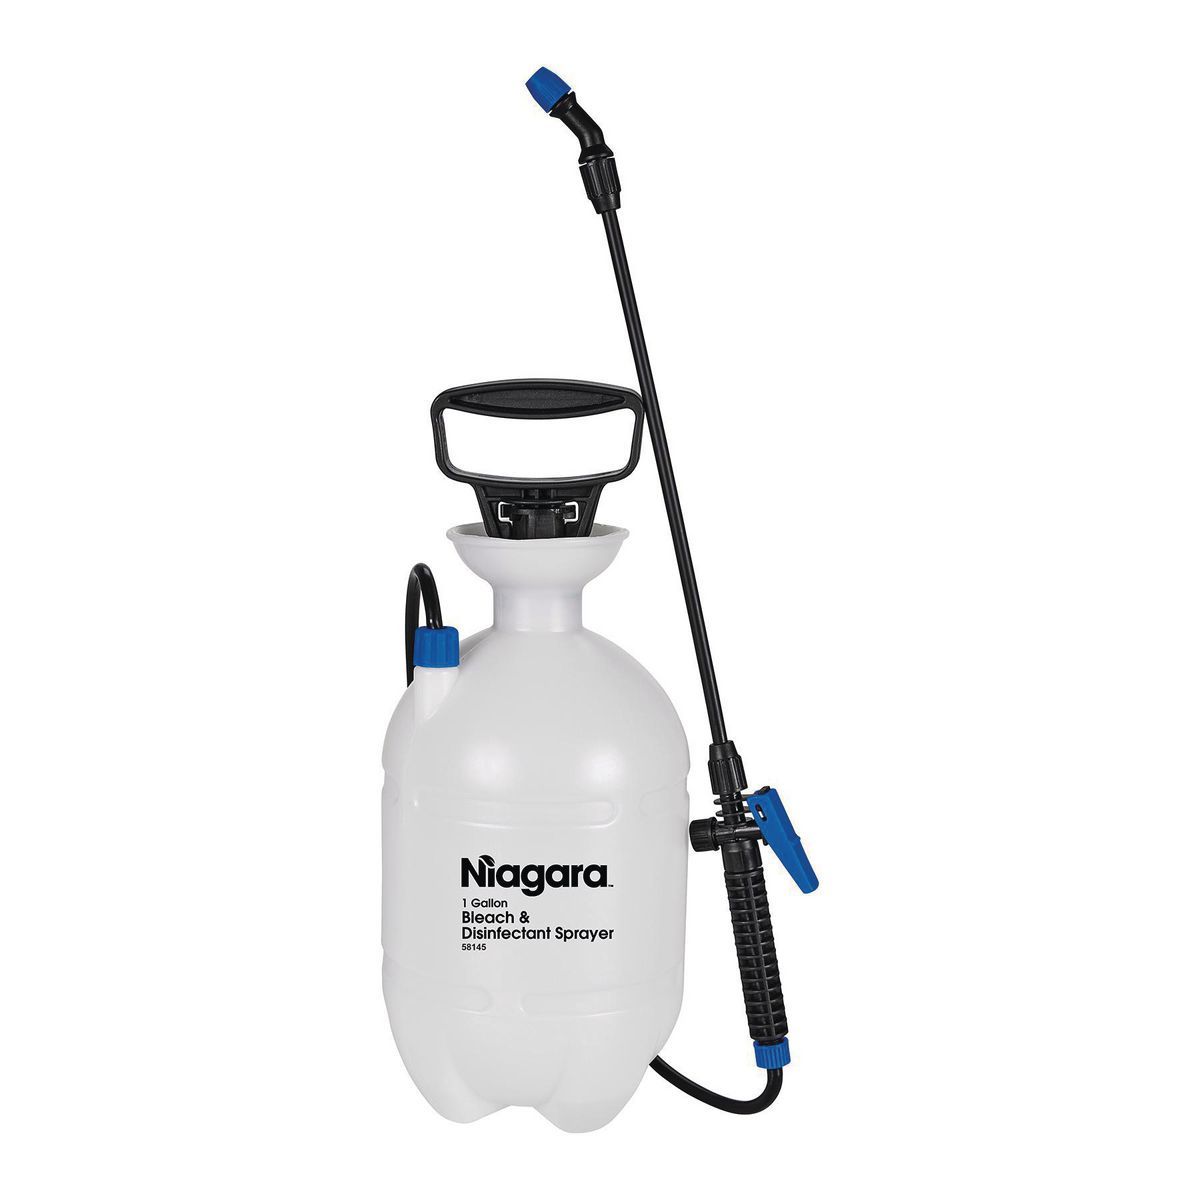 NIAGARA 1 Gallon Bleach and Disinfectant Sprayer